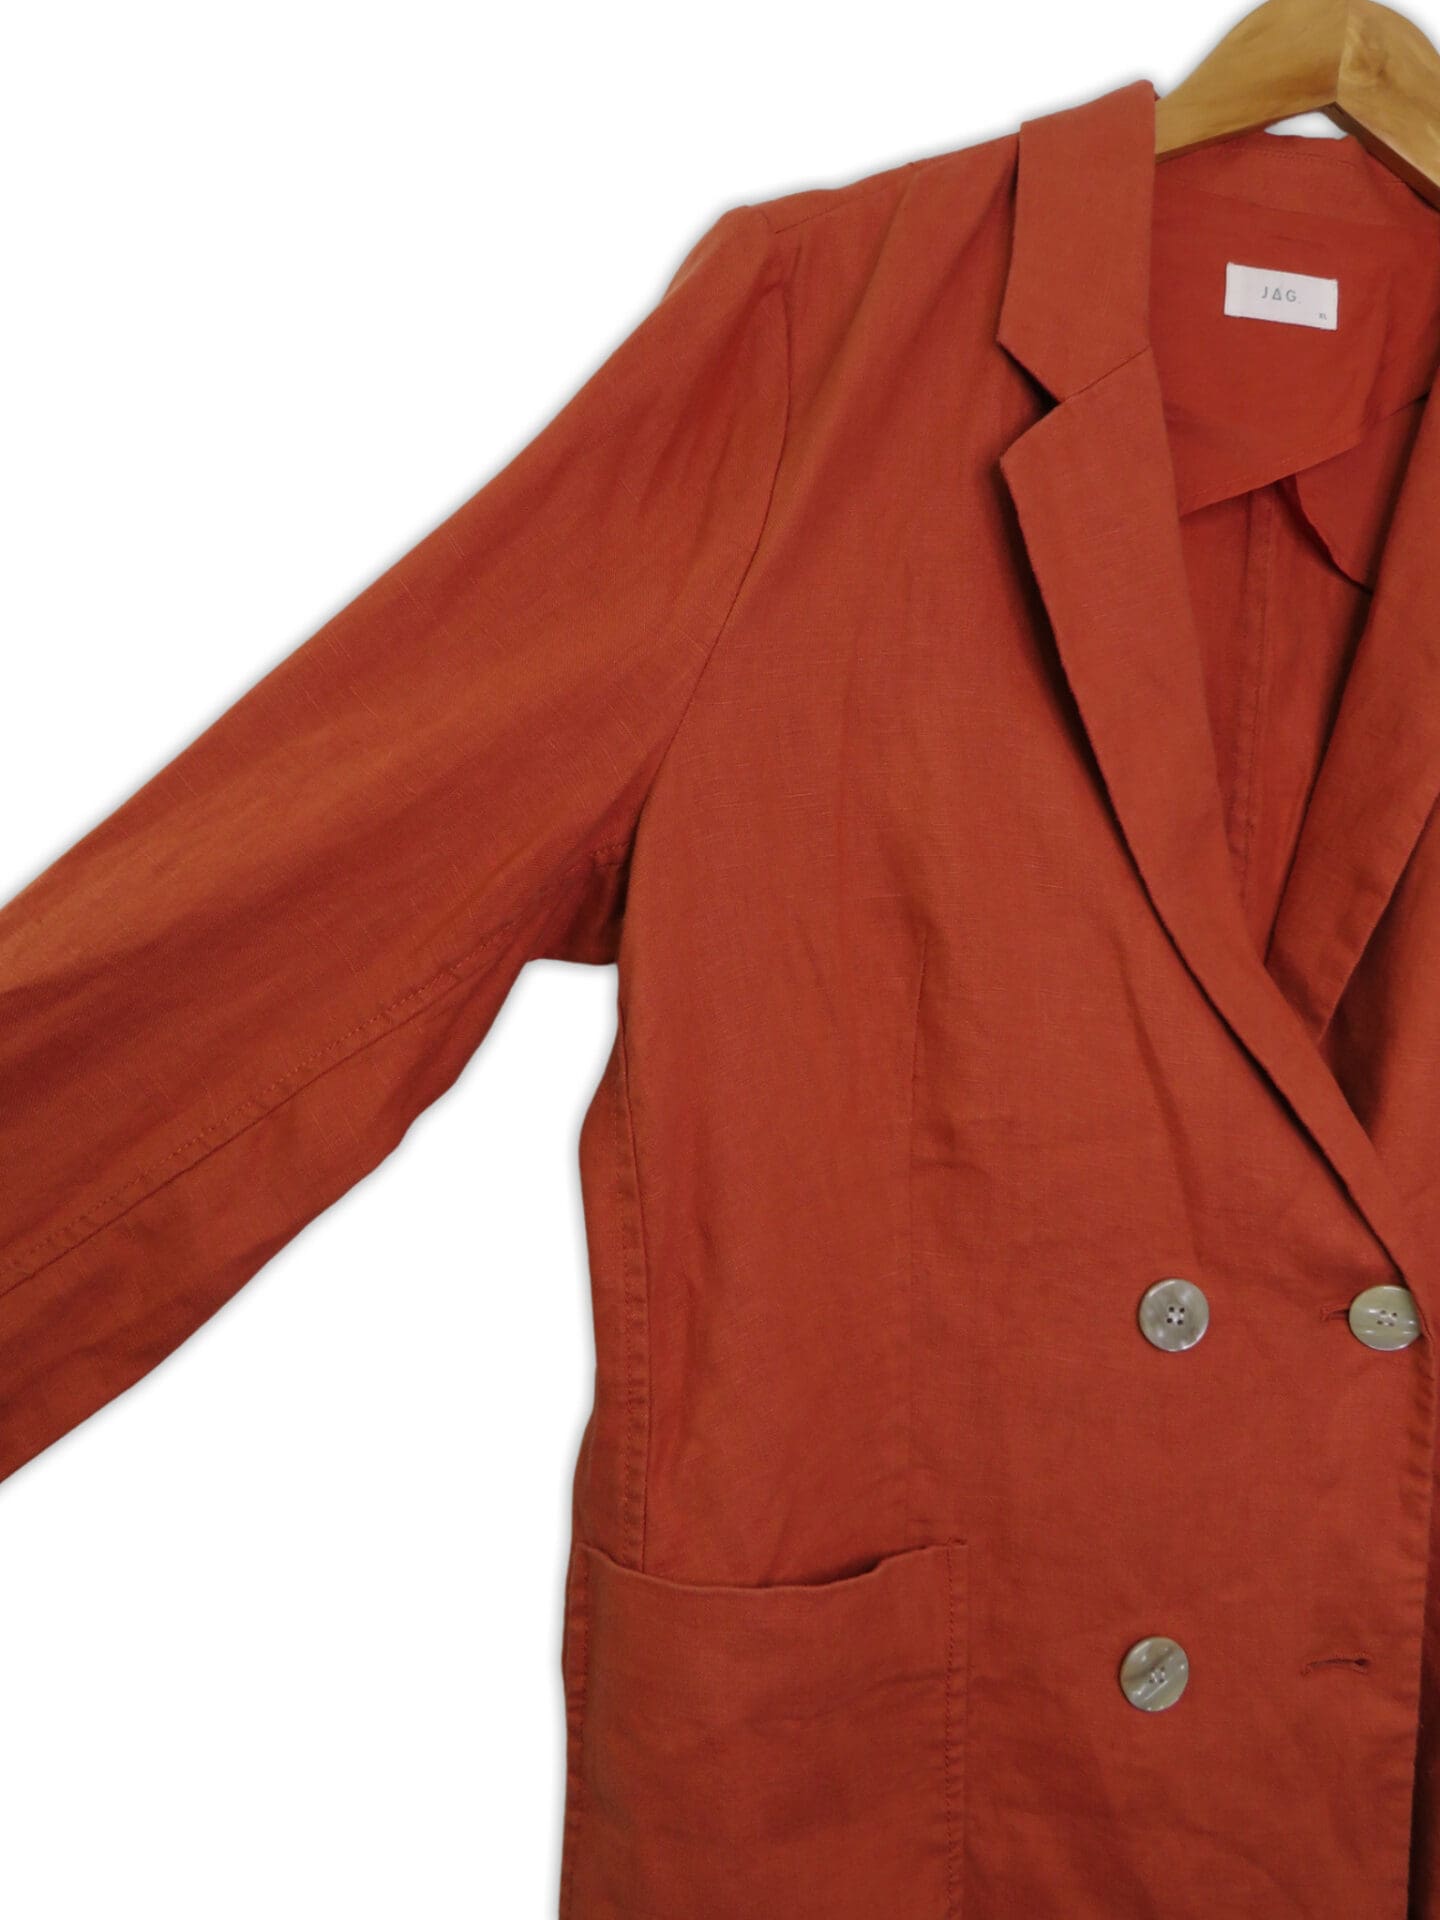 Orange linen women's loose fitting blazer